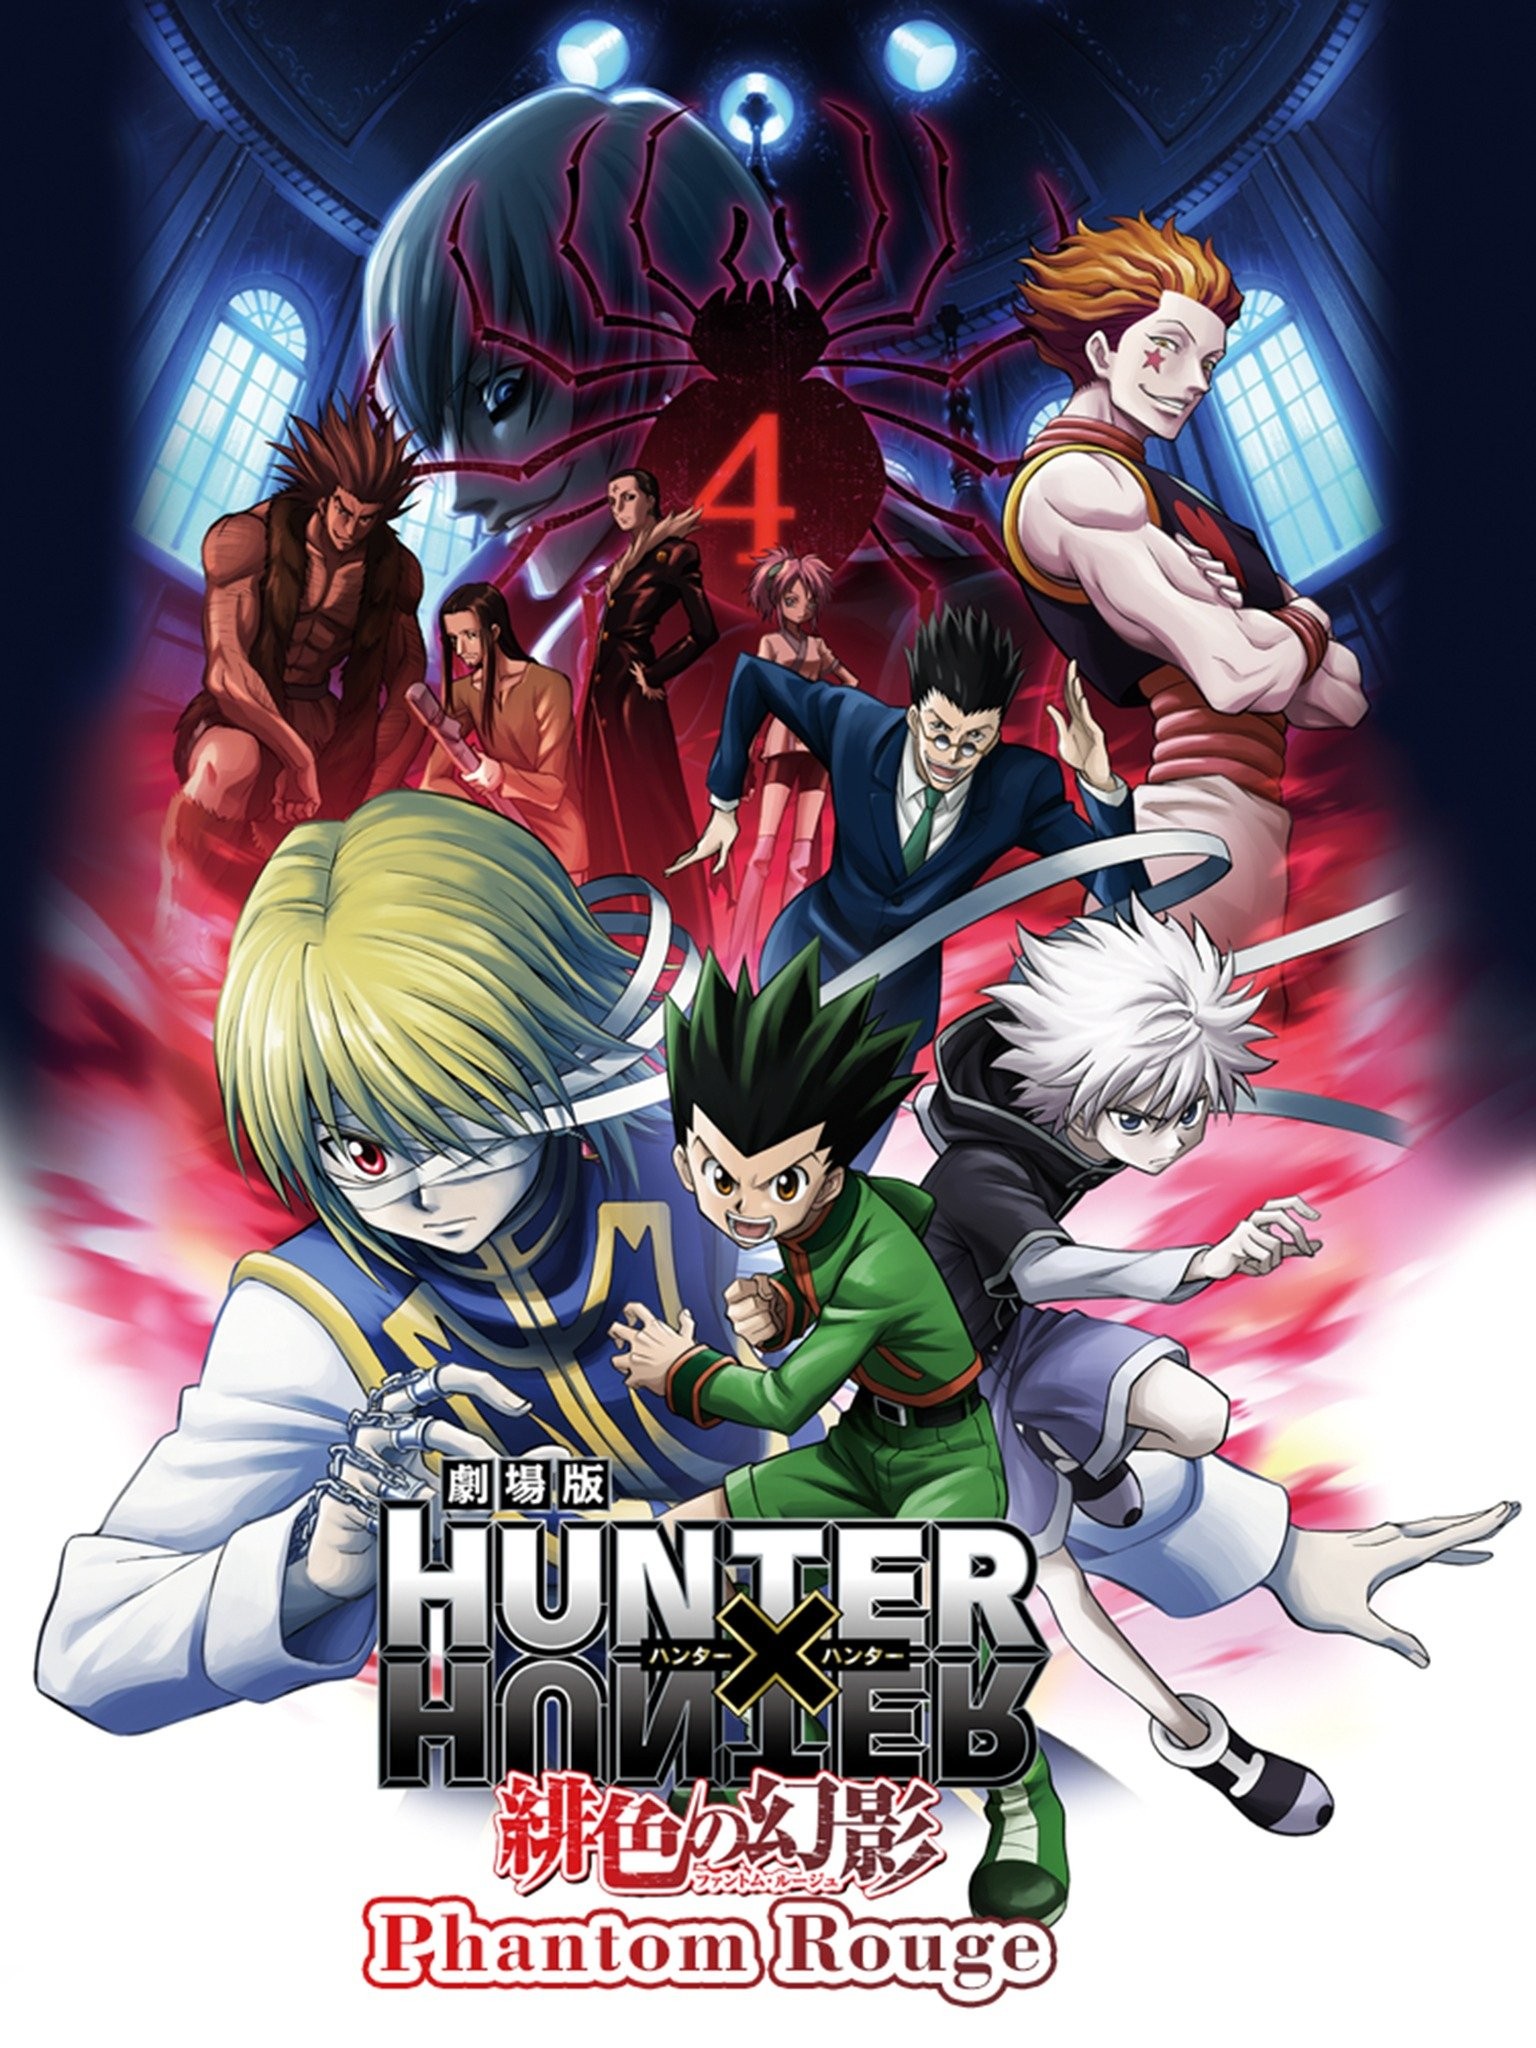 Hunter X Hunter: Season 5, Episode 18 - Rotten Tomatoes